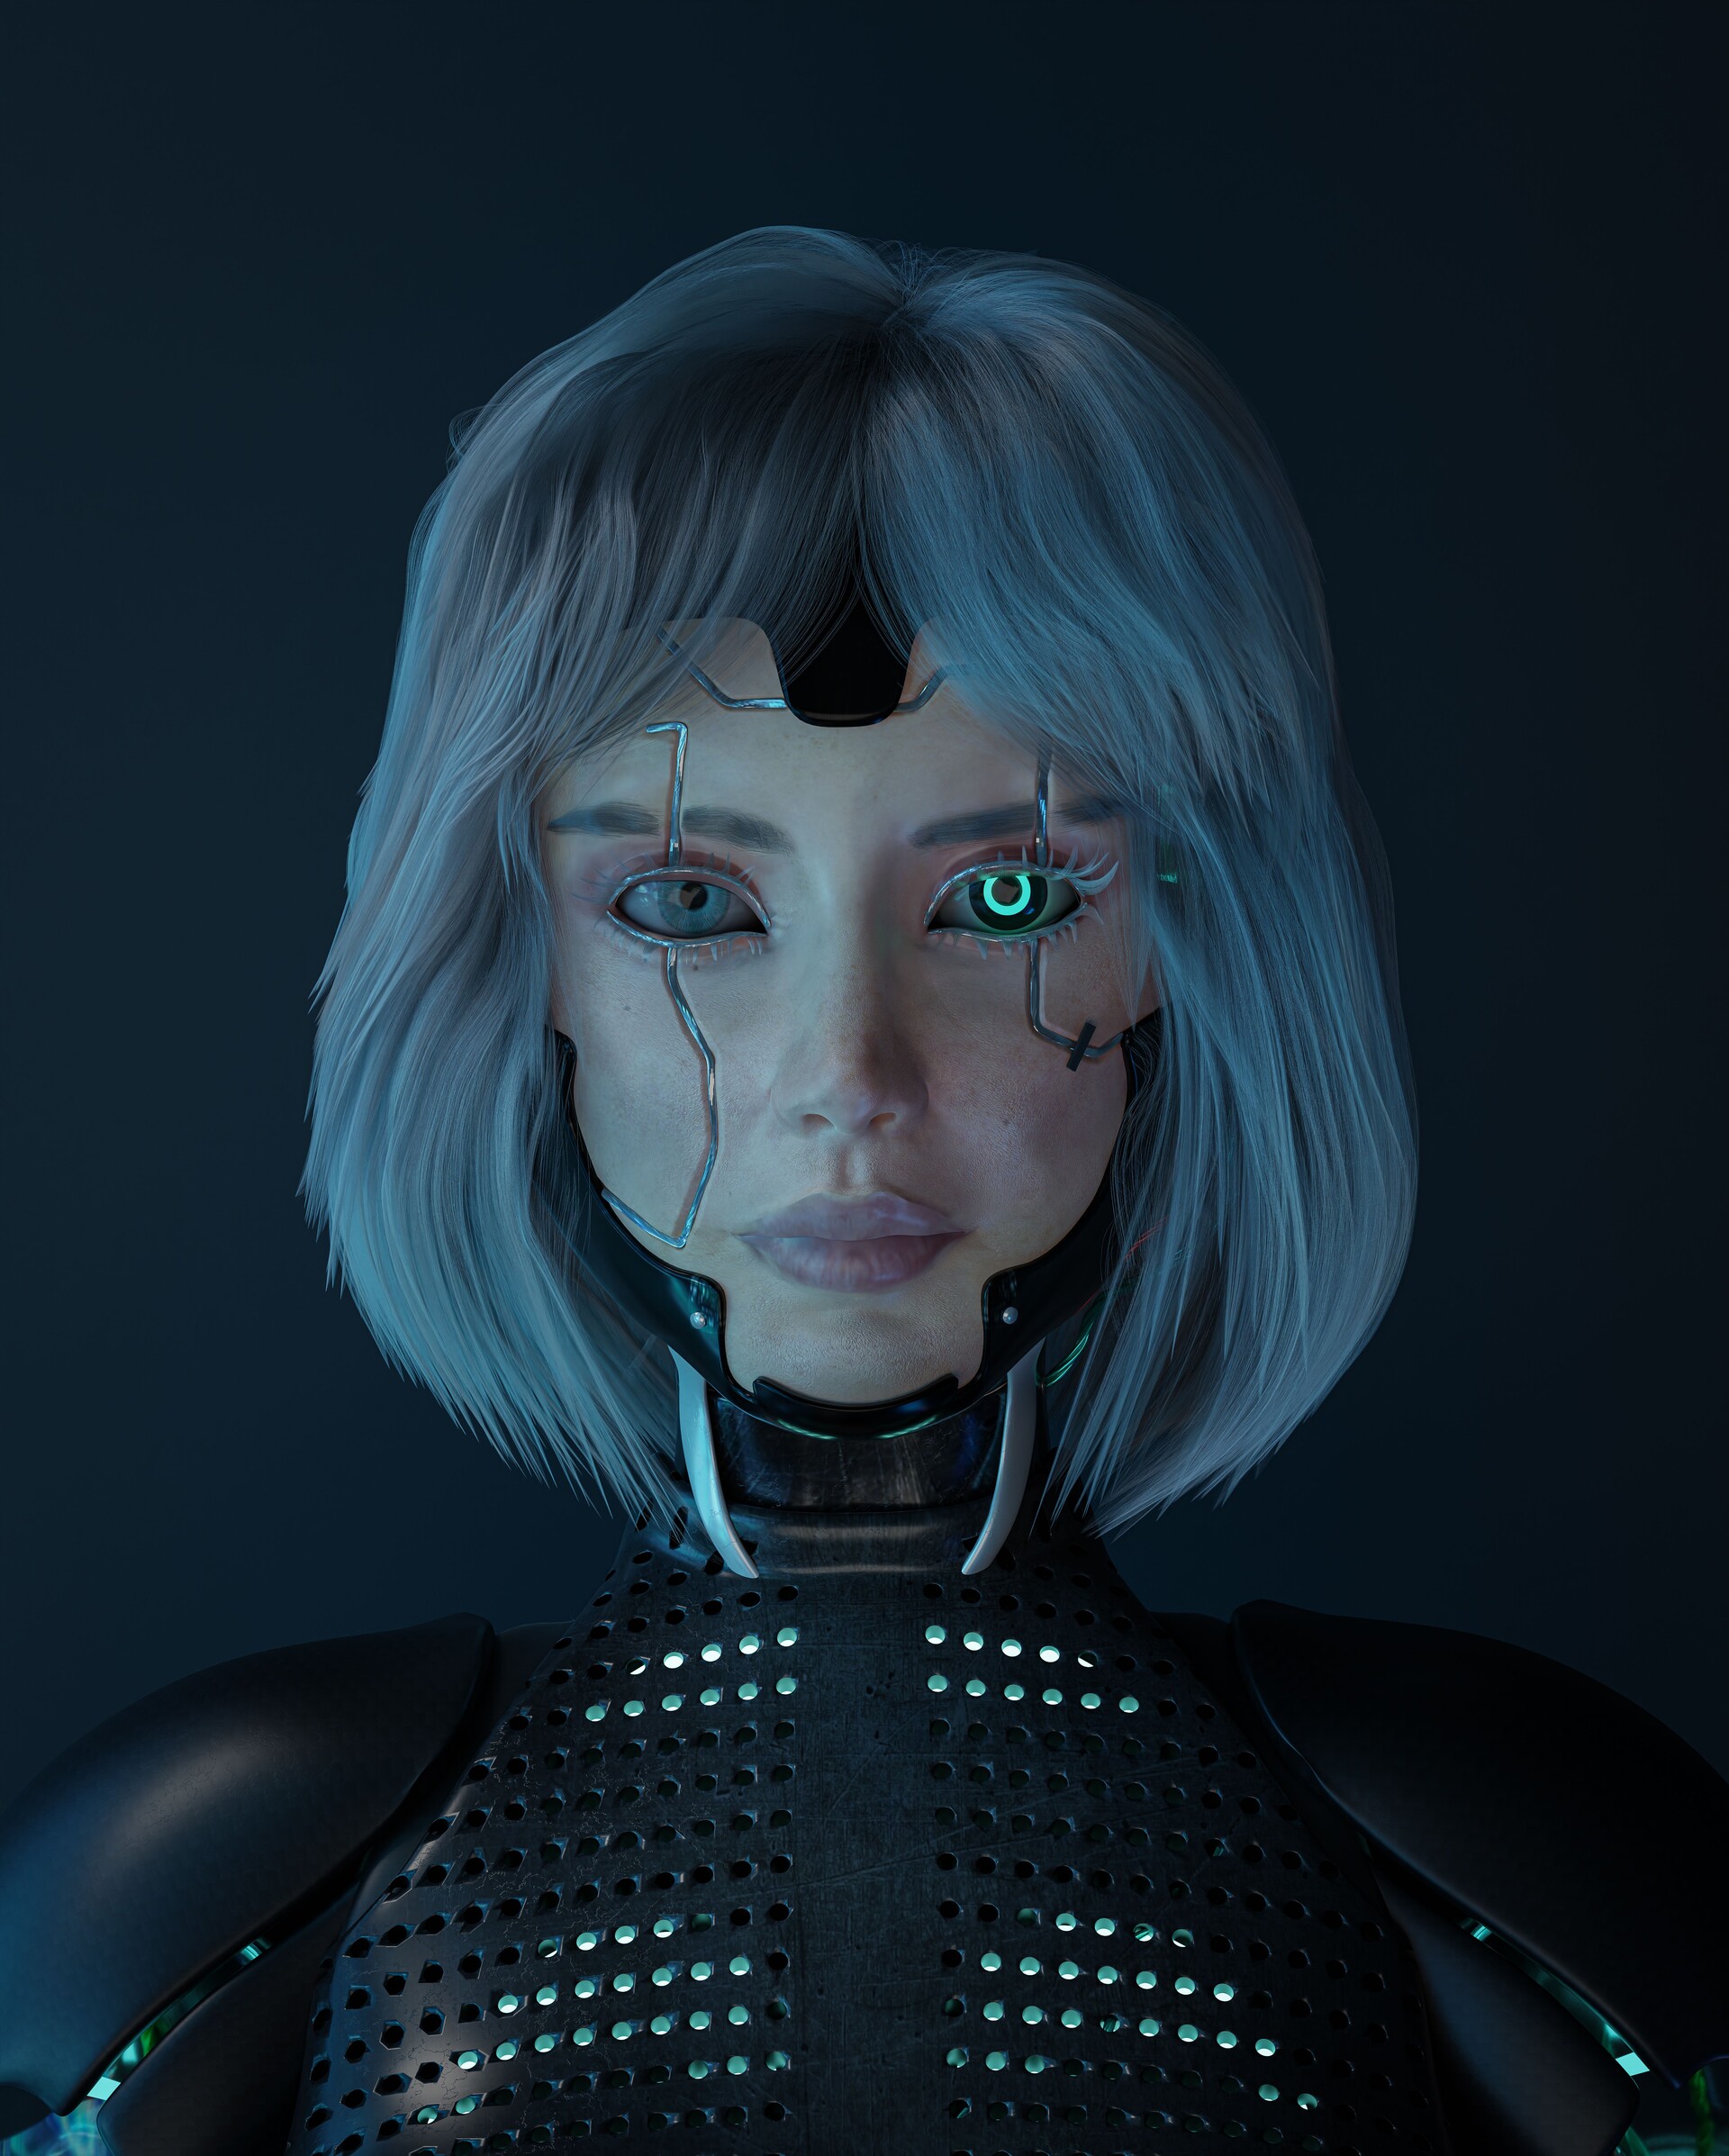 ArtStation - Cyberpunk-inspired character